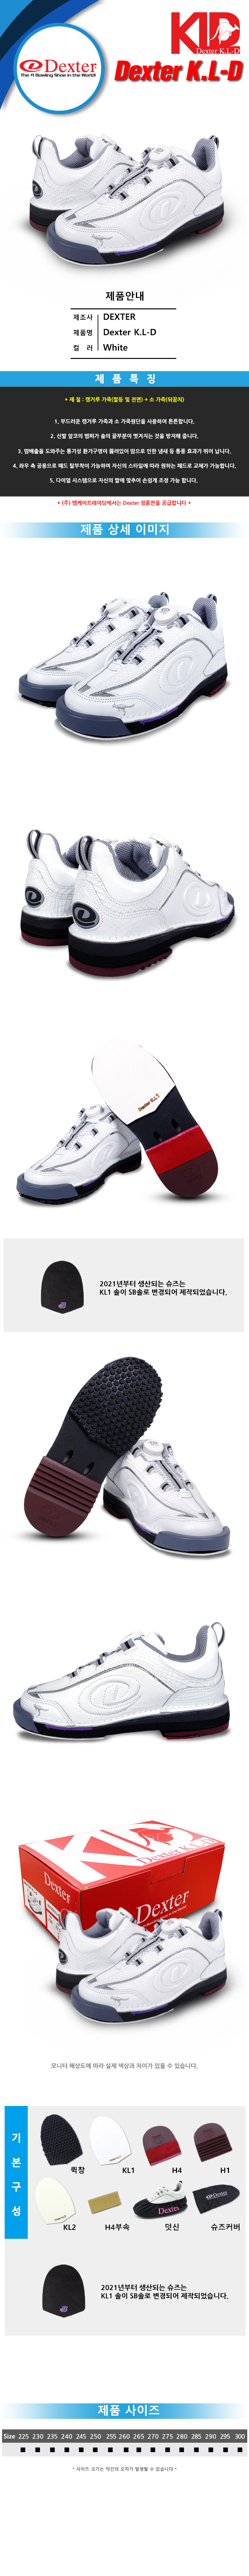 max bowling shoes korea